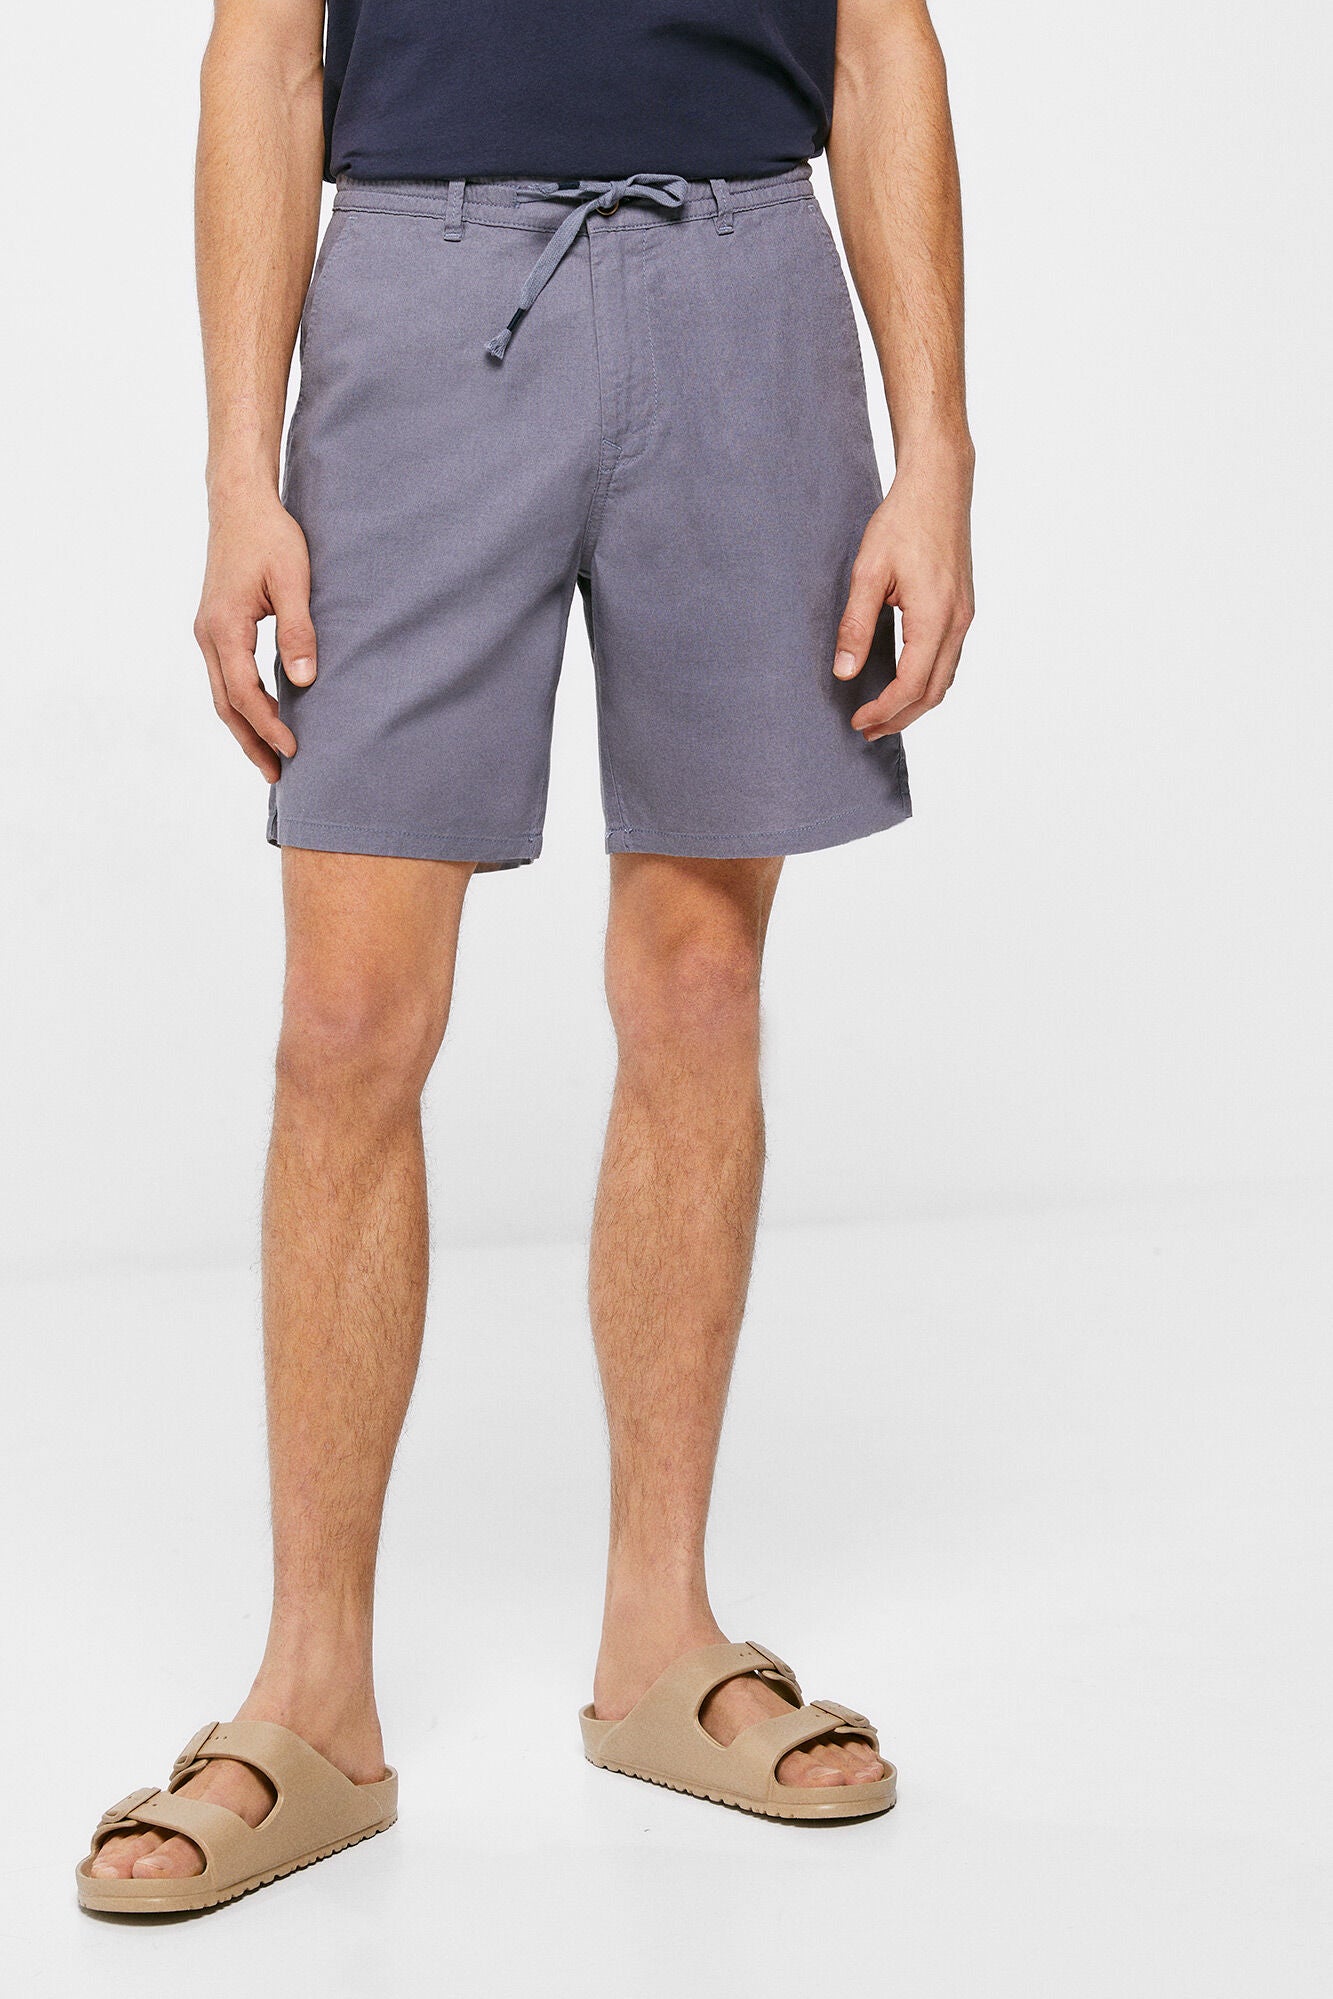 Medium Blue Lace Bermuda Shorts